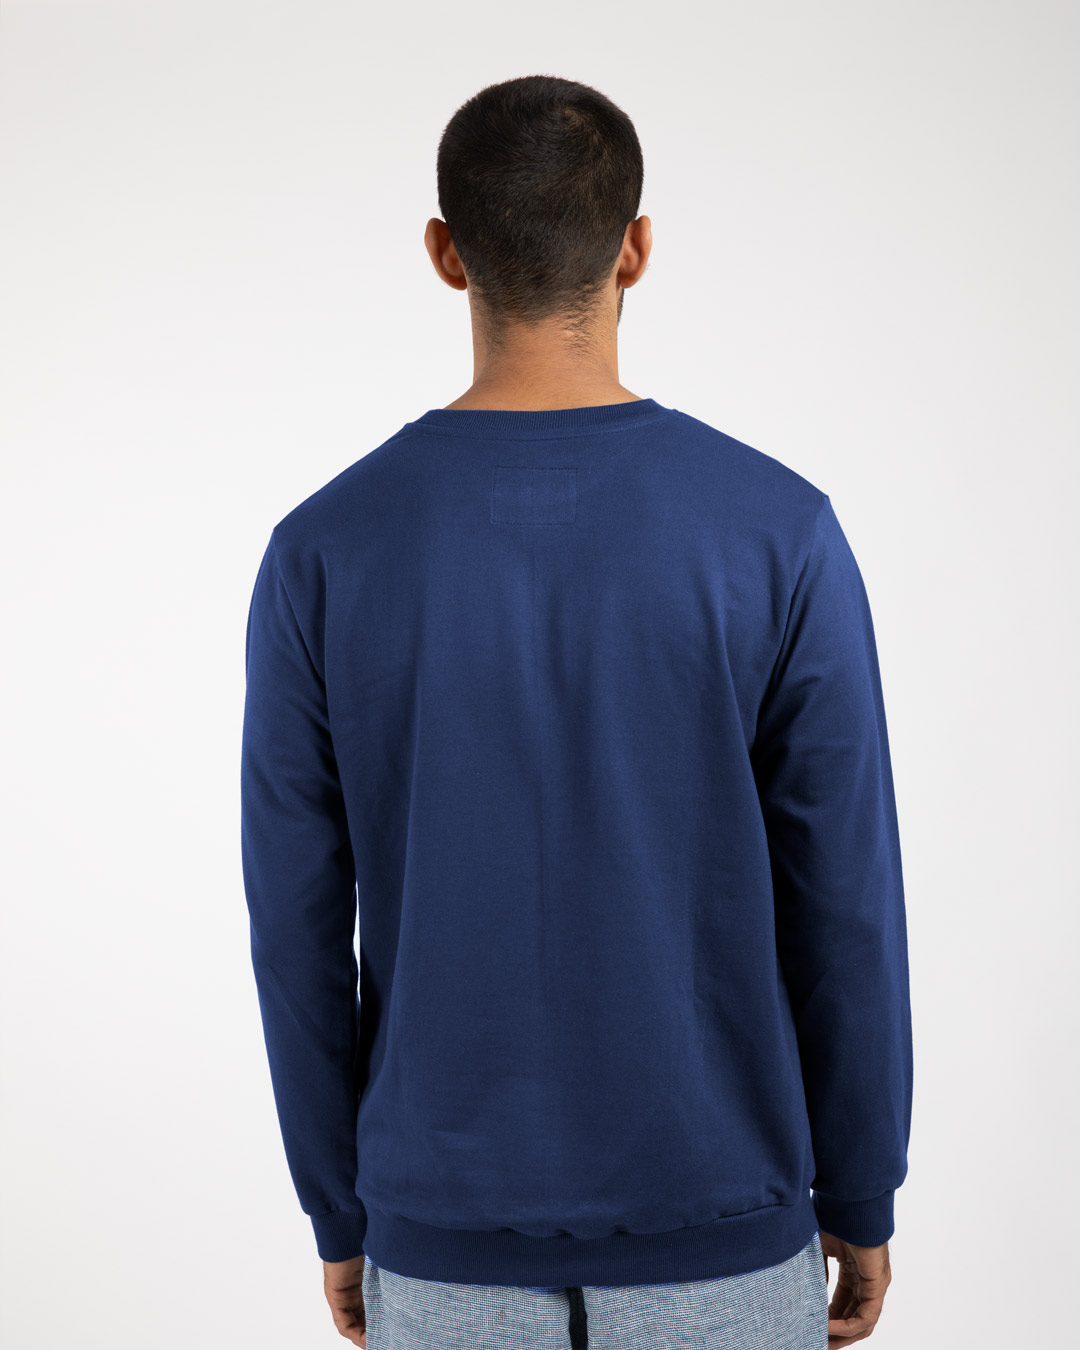 Shop Cap'n America Fleece Light Sweatshirts (AVL)-Back